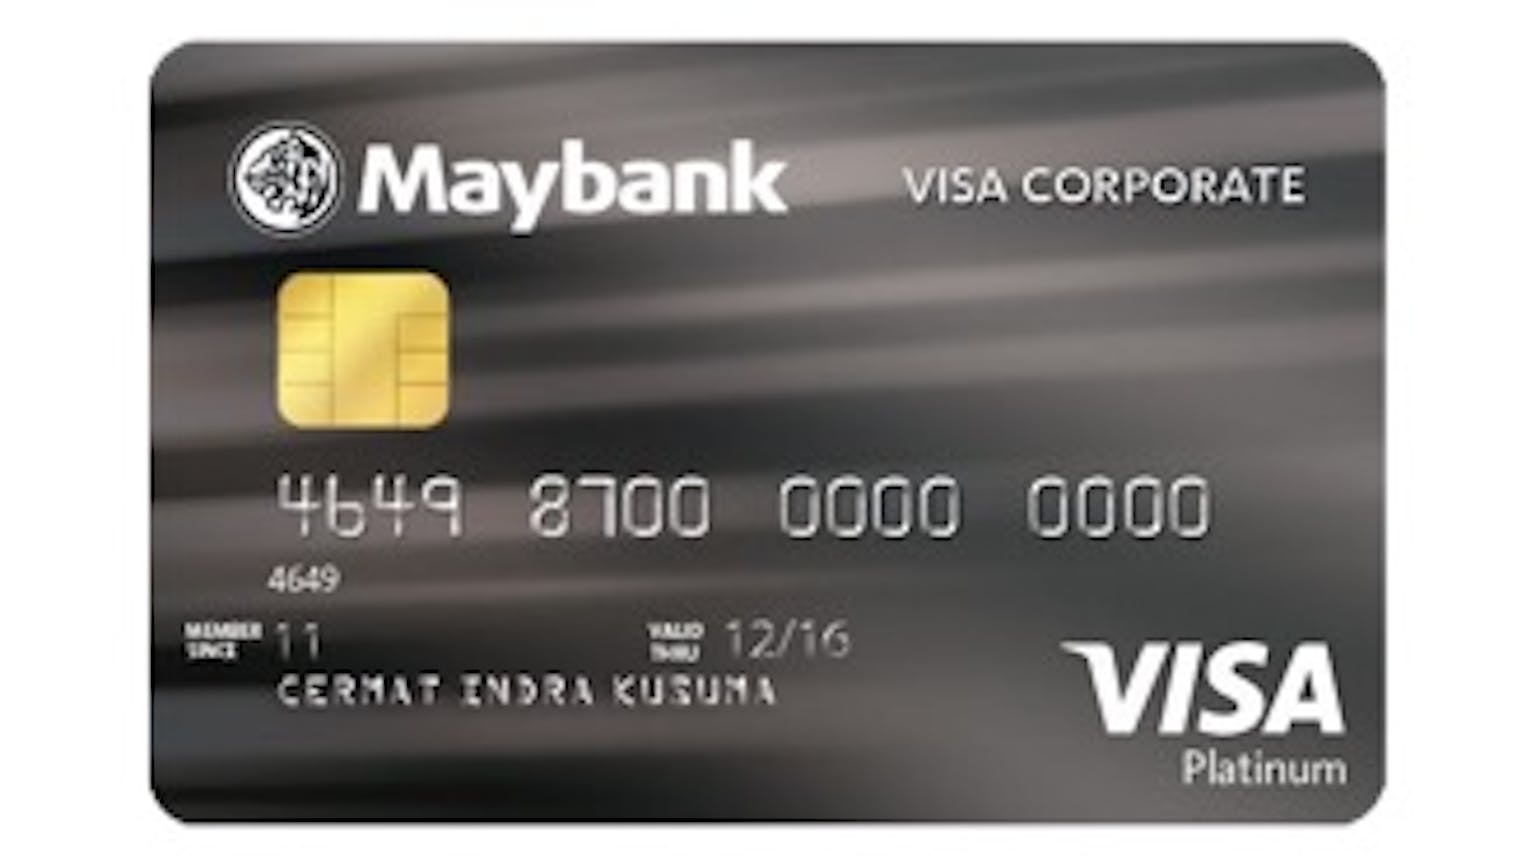 Maybank VISA Corporate